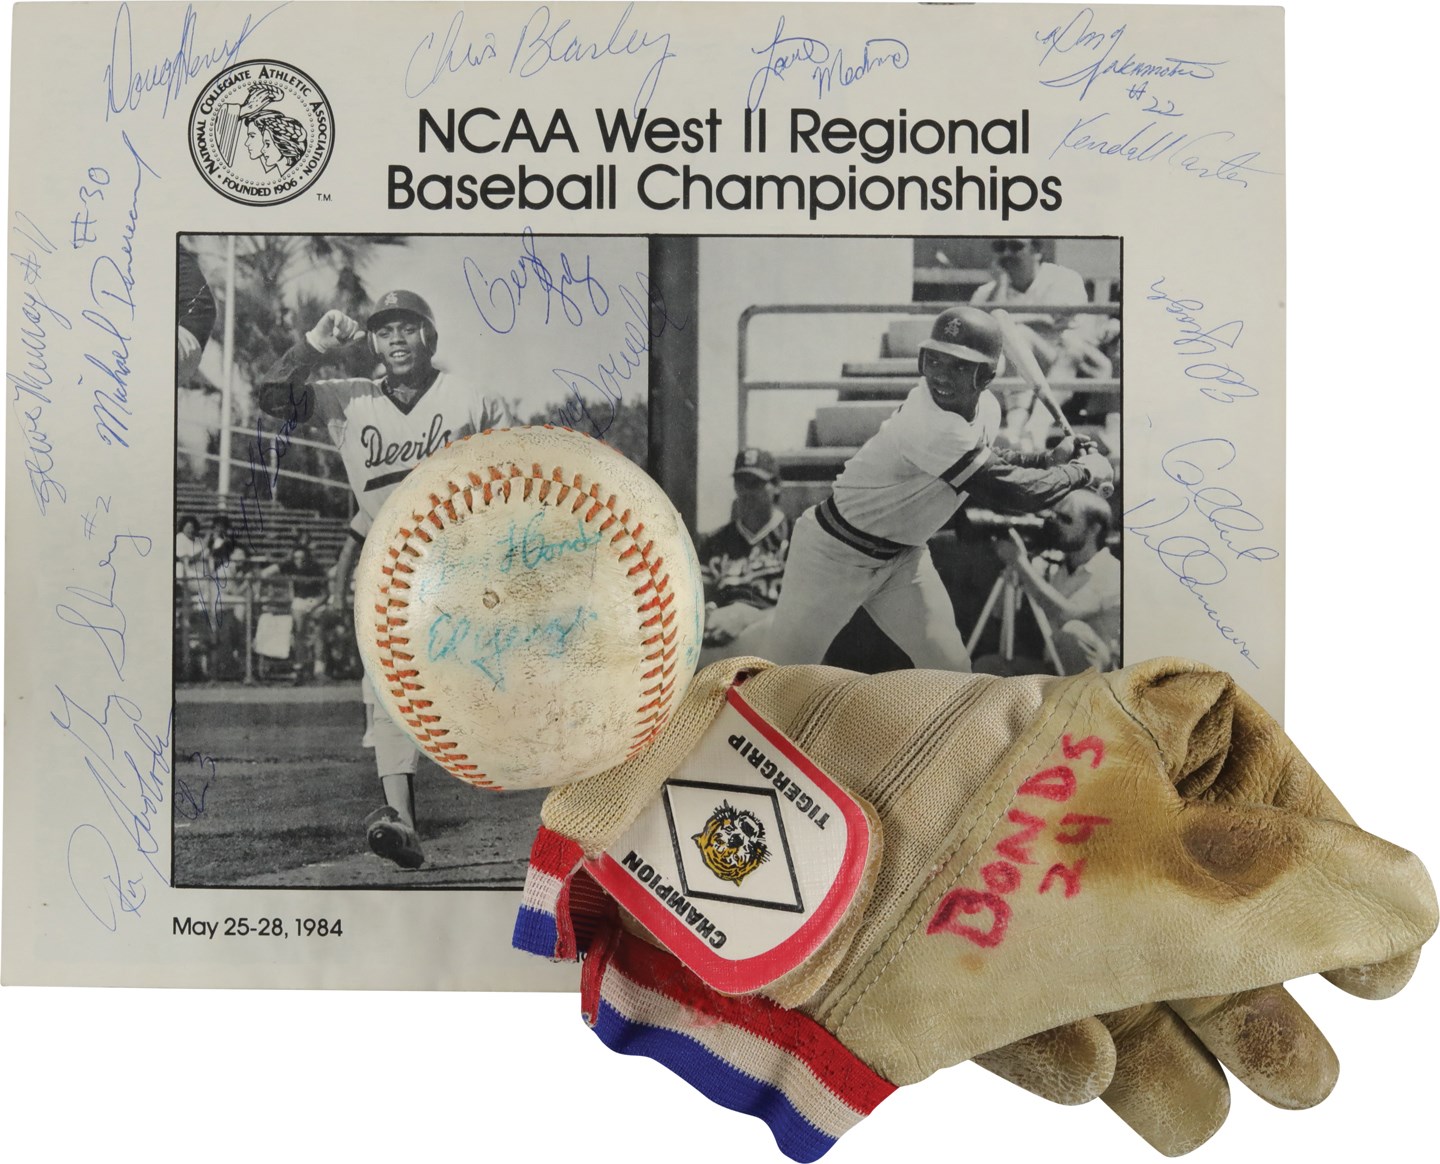 1984 Barry Bonds Arizona State NCAA Regional Championship Game Used Batting Glove with Team-Signed Program and Baseball